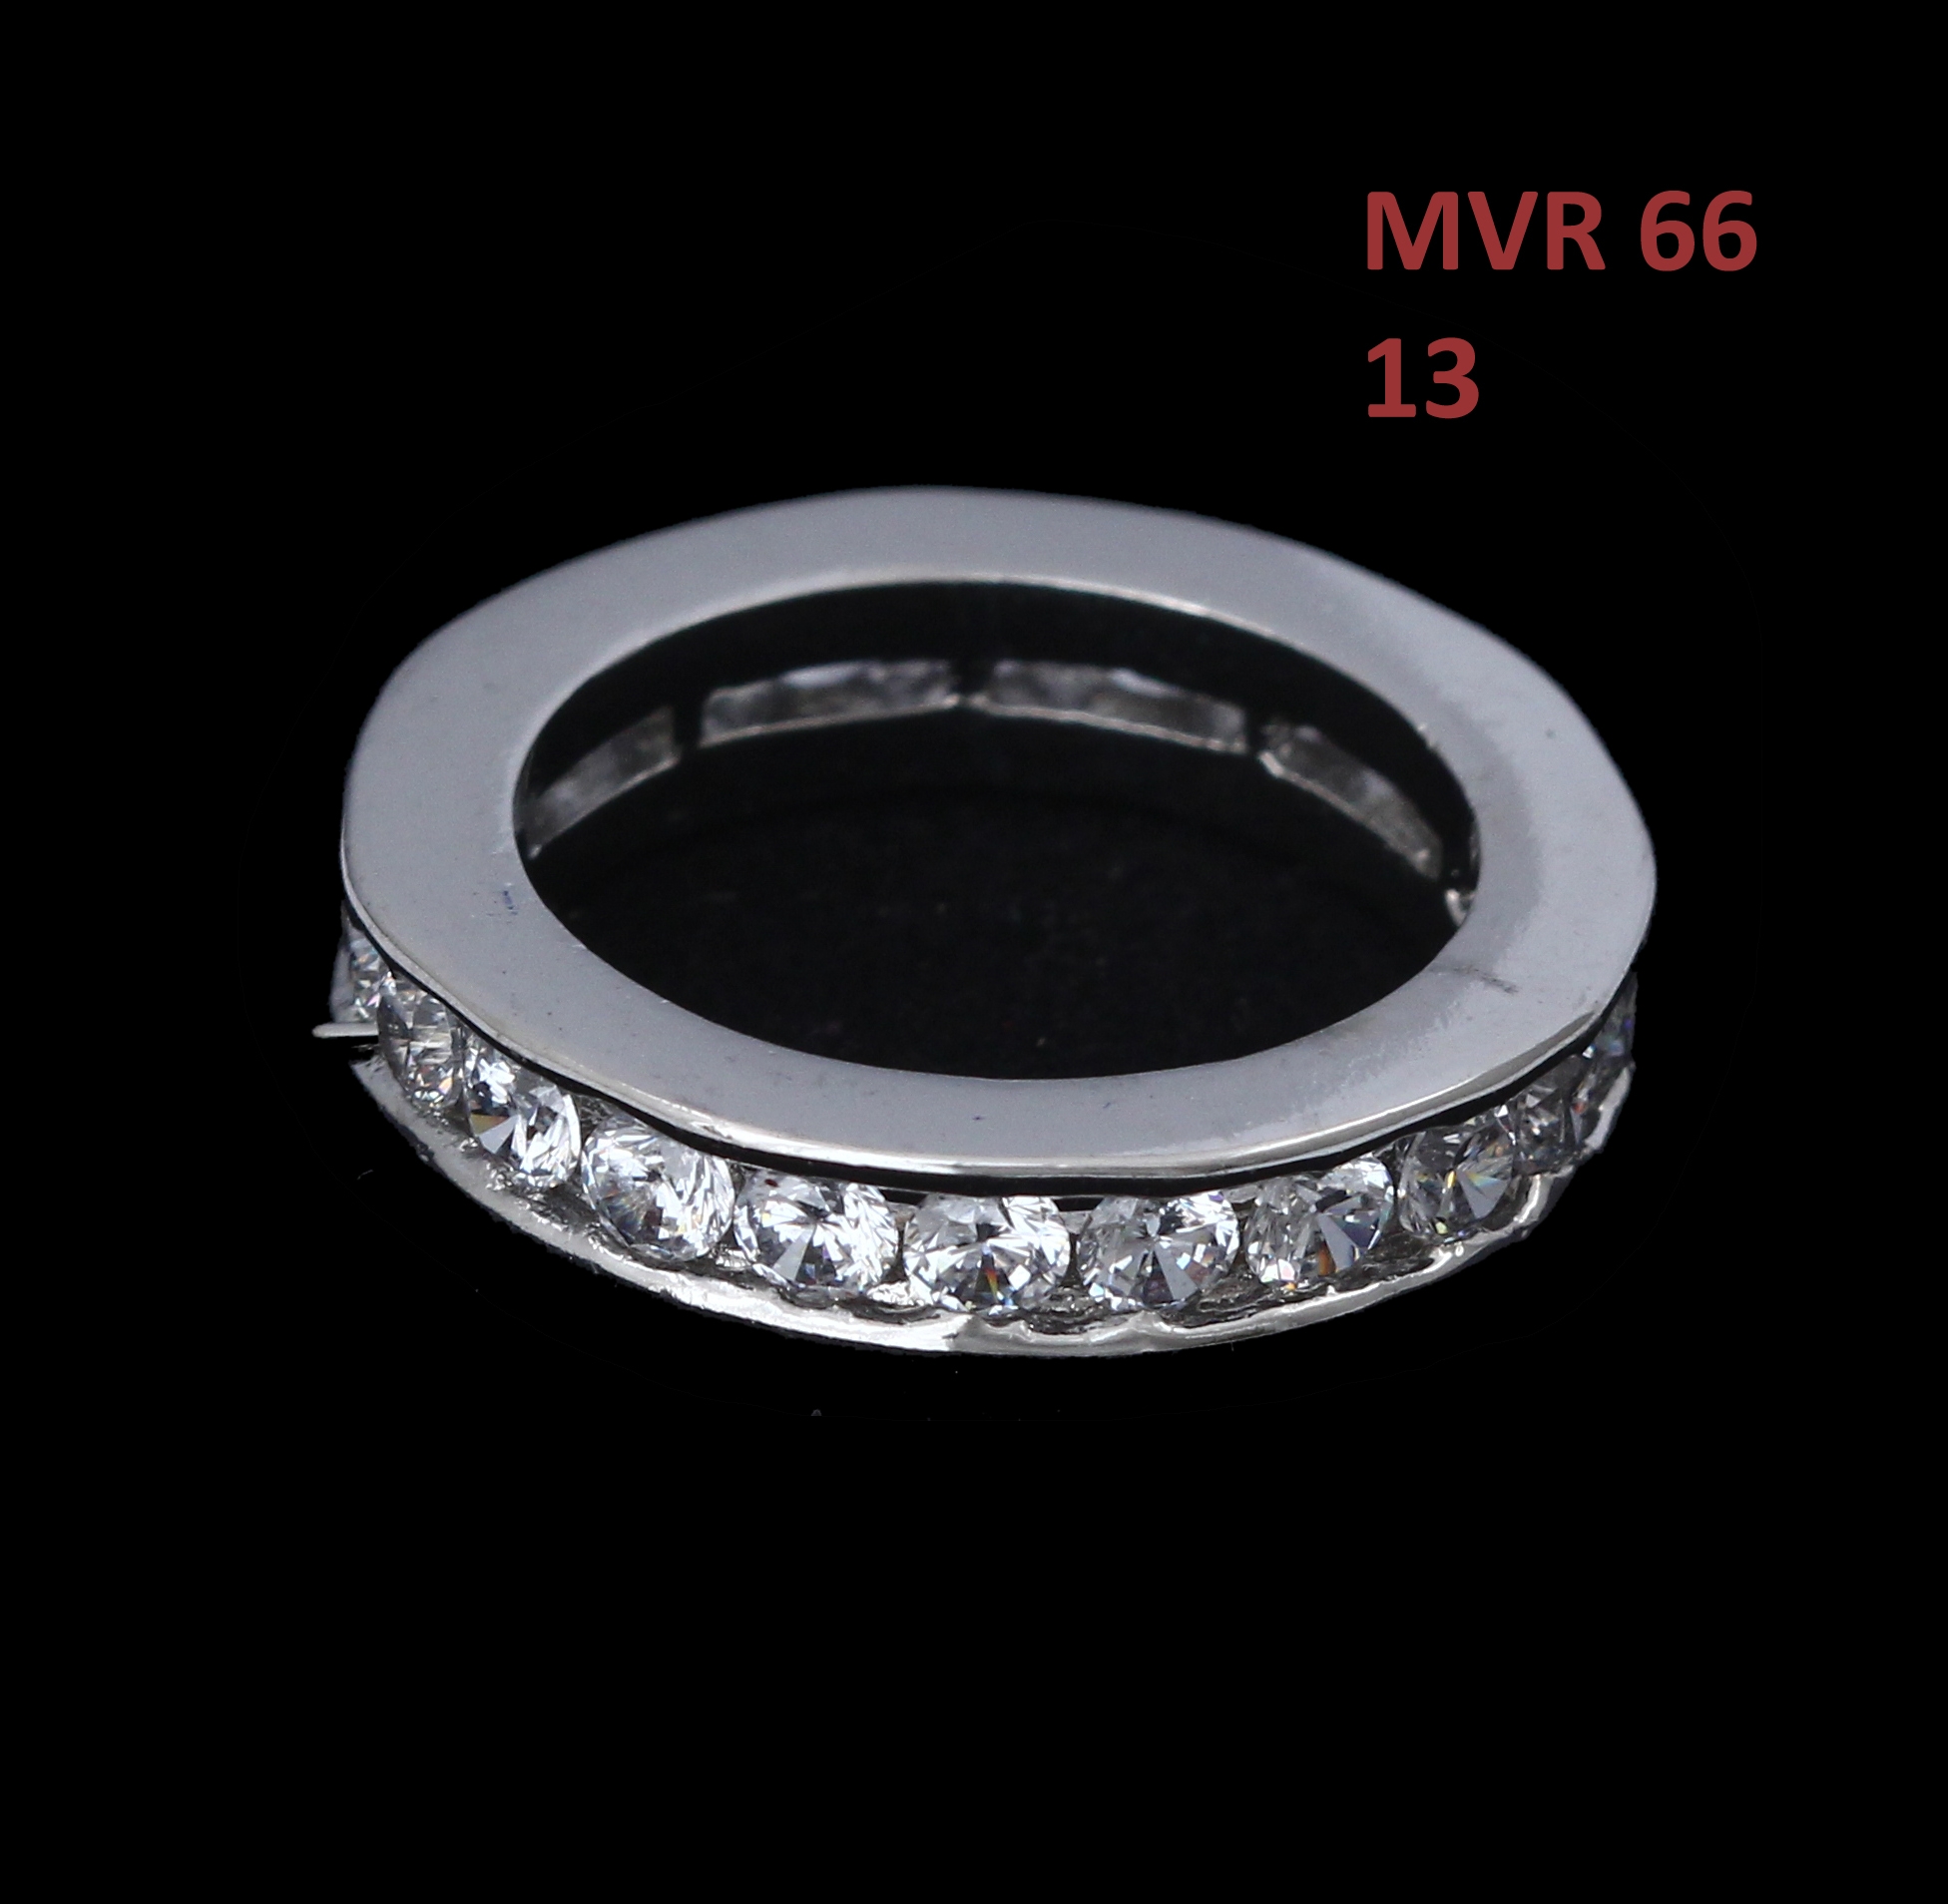 55Carat | Jewelry Ethnic Design Polki Ring Round Cubic Zircon White Unique 18K Gold Plated Fashion Designer Jewellery For Girls Ladies Women Mvr 66-White